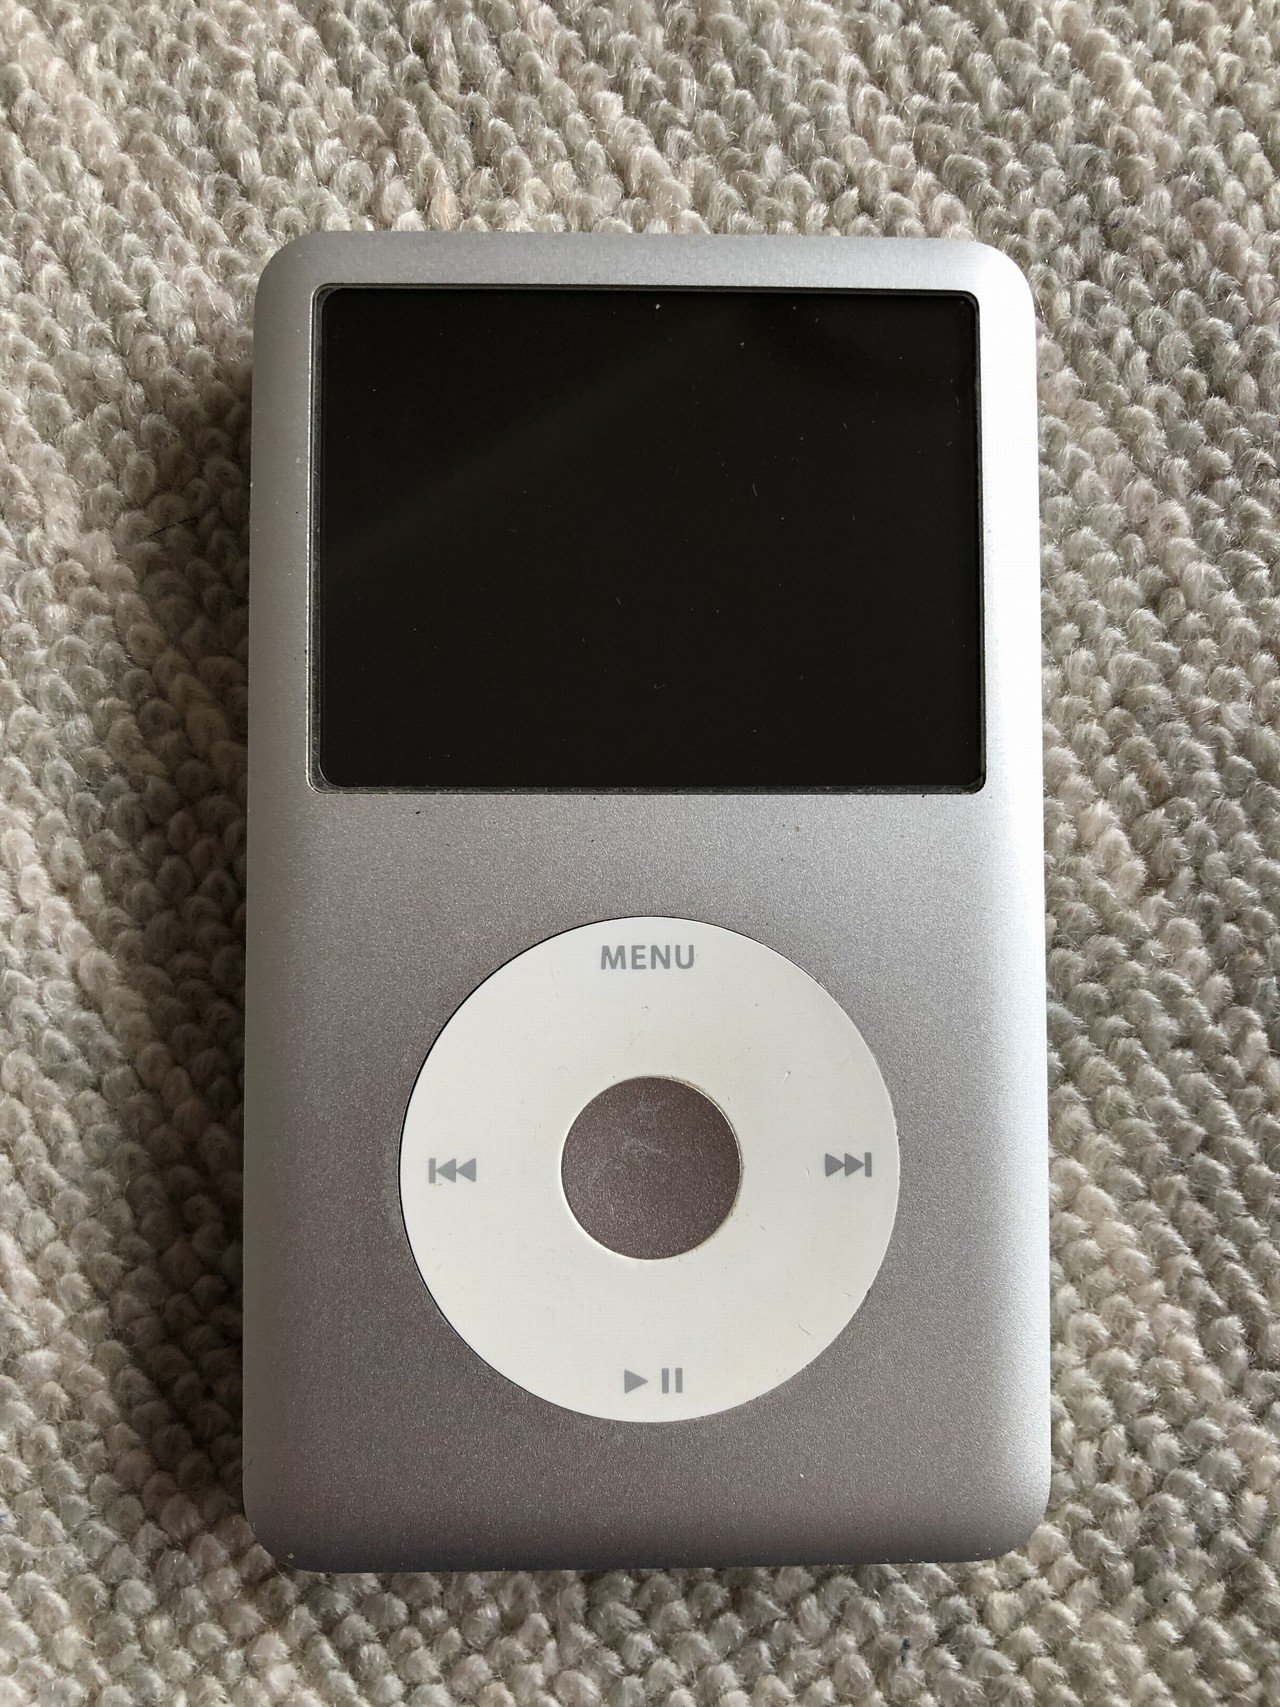 iPod Classic大容量化改造計画｜シュカイ